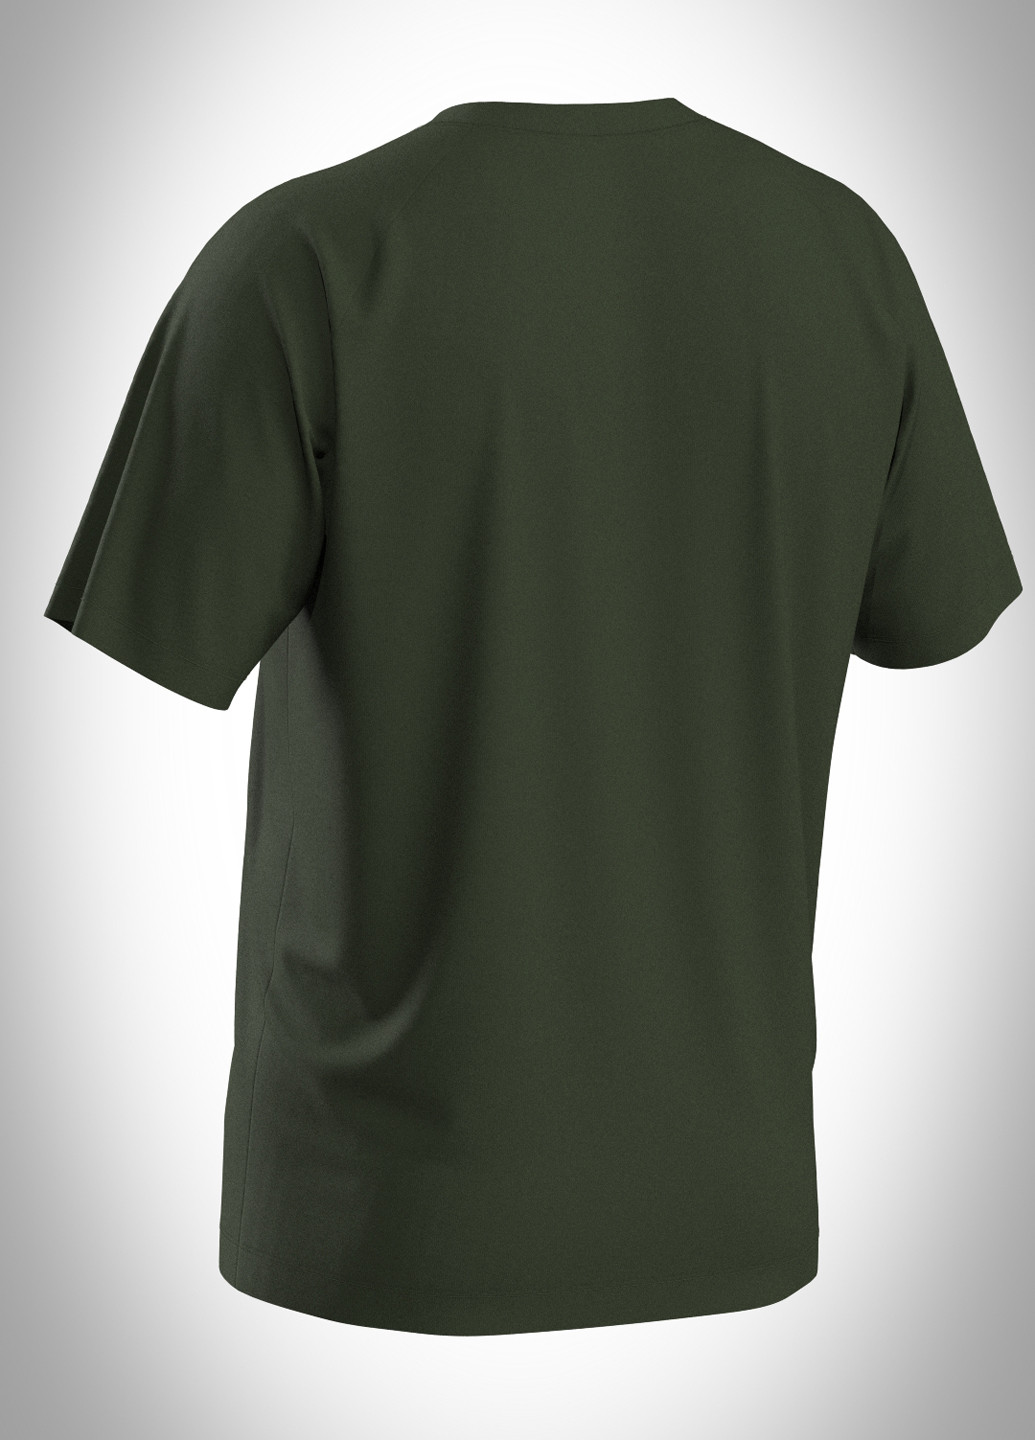 Хаки (оливковая) футболка SA-sport